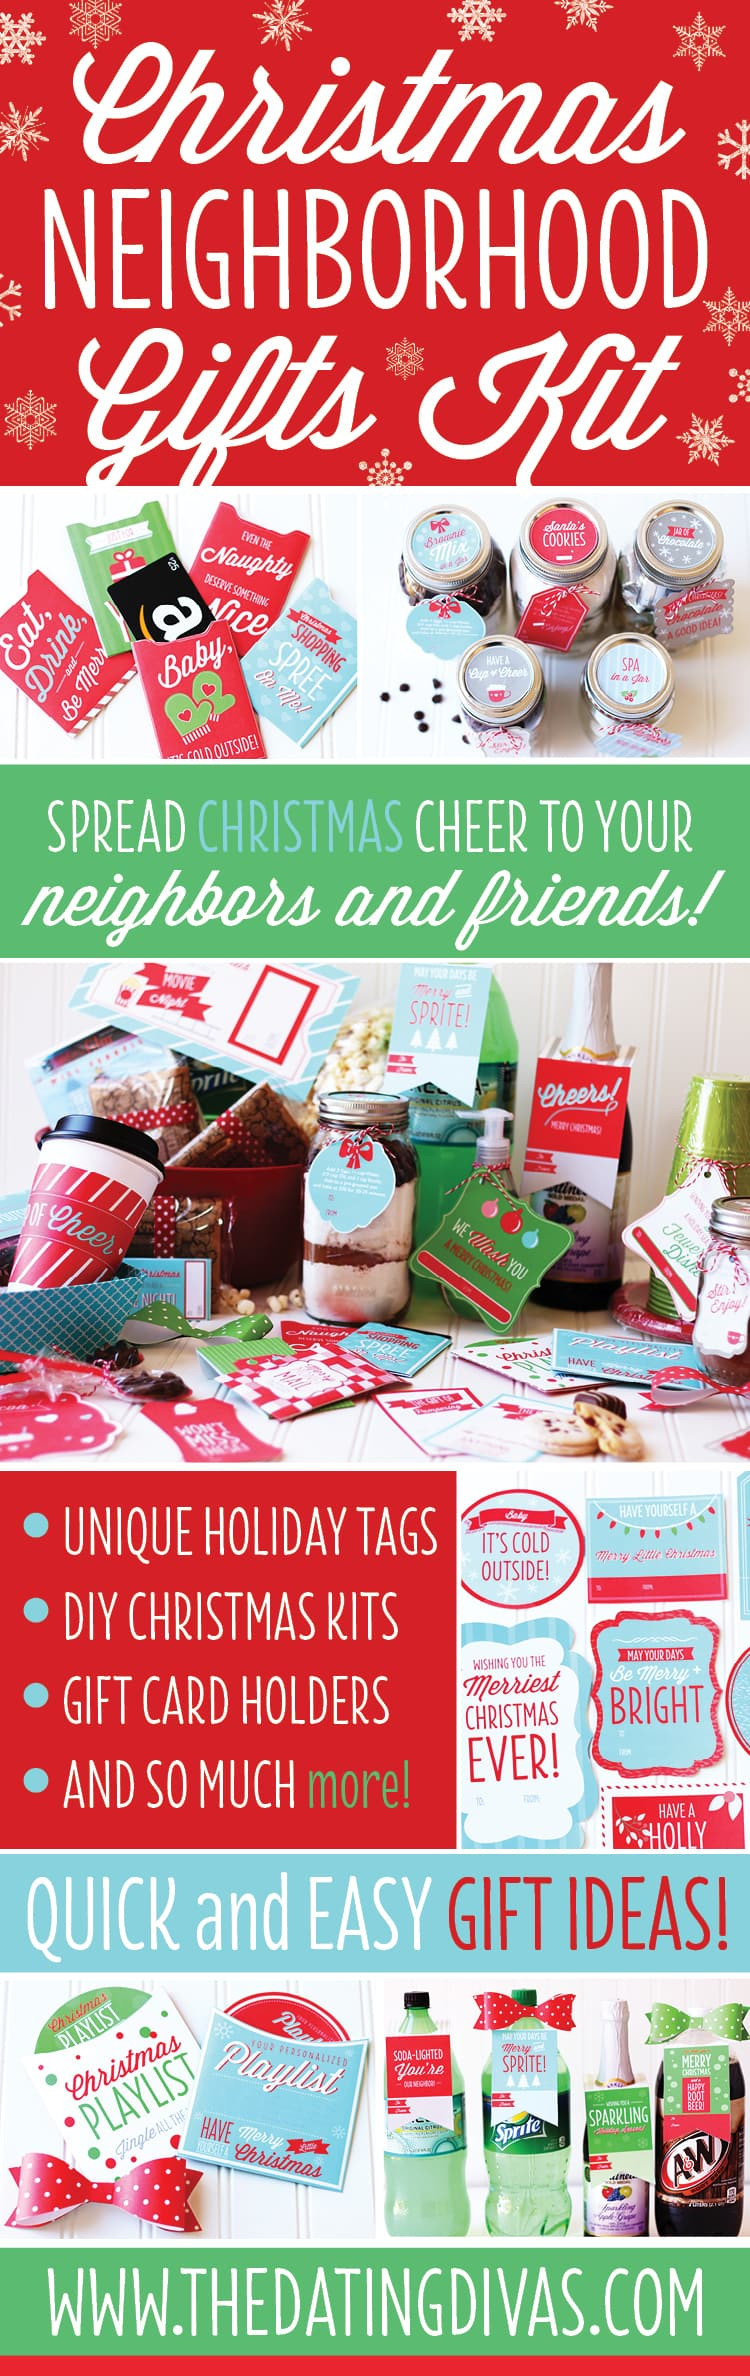 Best ideas about Neighbor Christmas Gift Ideas
. Save or Pin Christmas Neighbor Gift Ideas Pack Now.